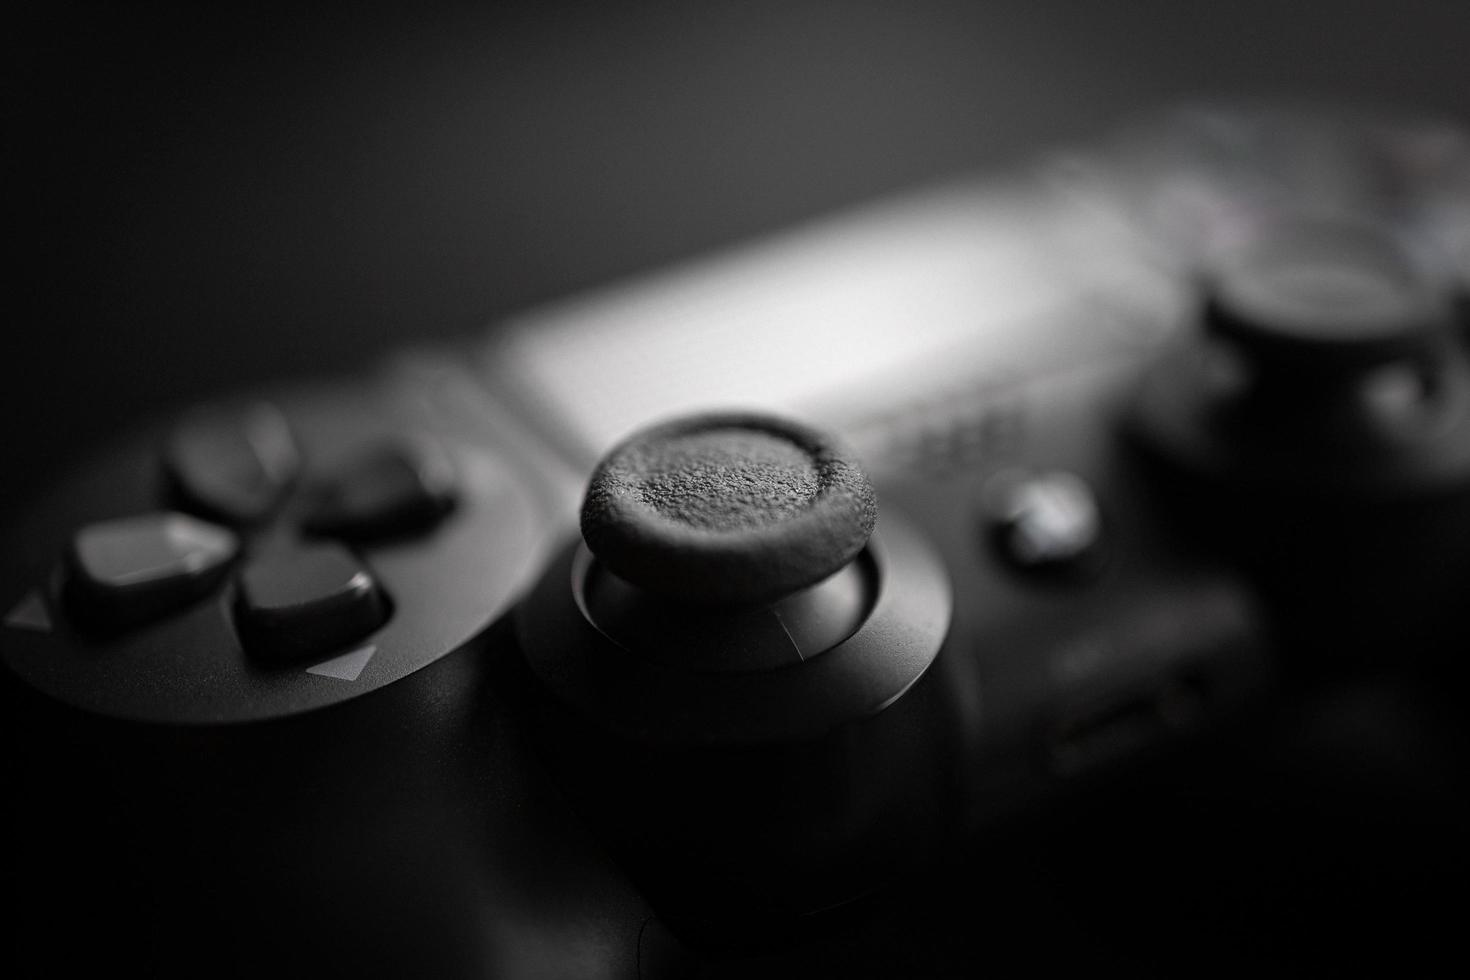 Gamepad close up photo